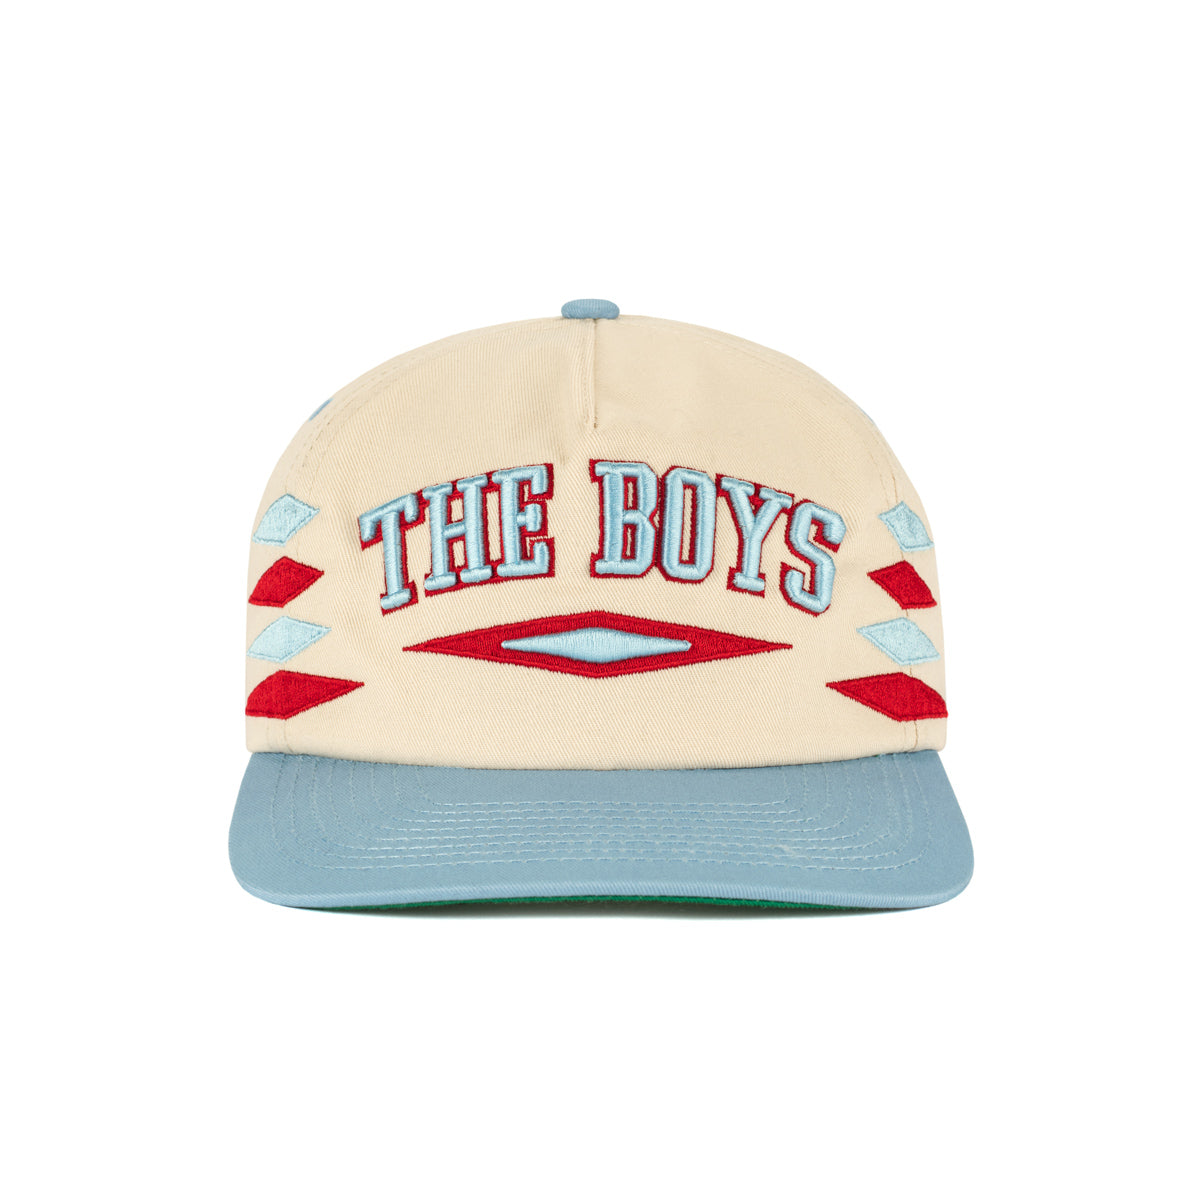 The Boys Diamond Retro Hat-Hats-Bussin With The Boys-Tan/Light Blue-OS-Barstool Sports